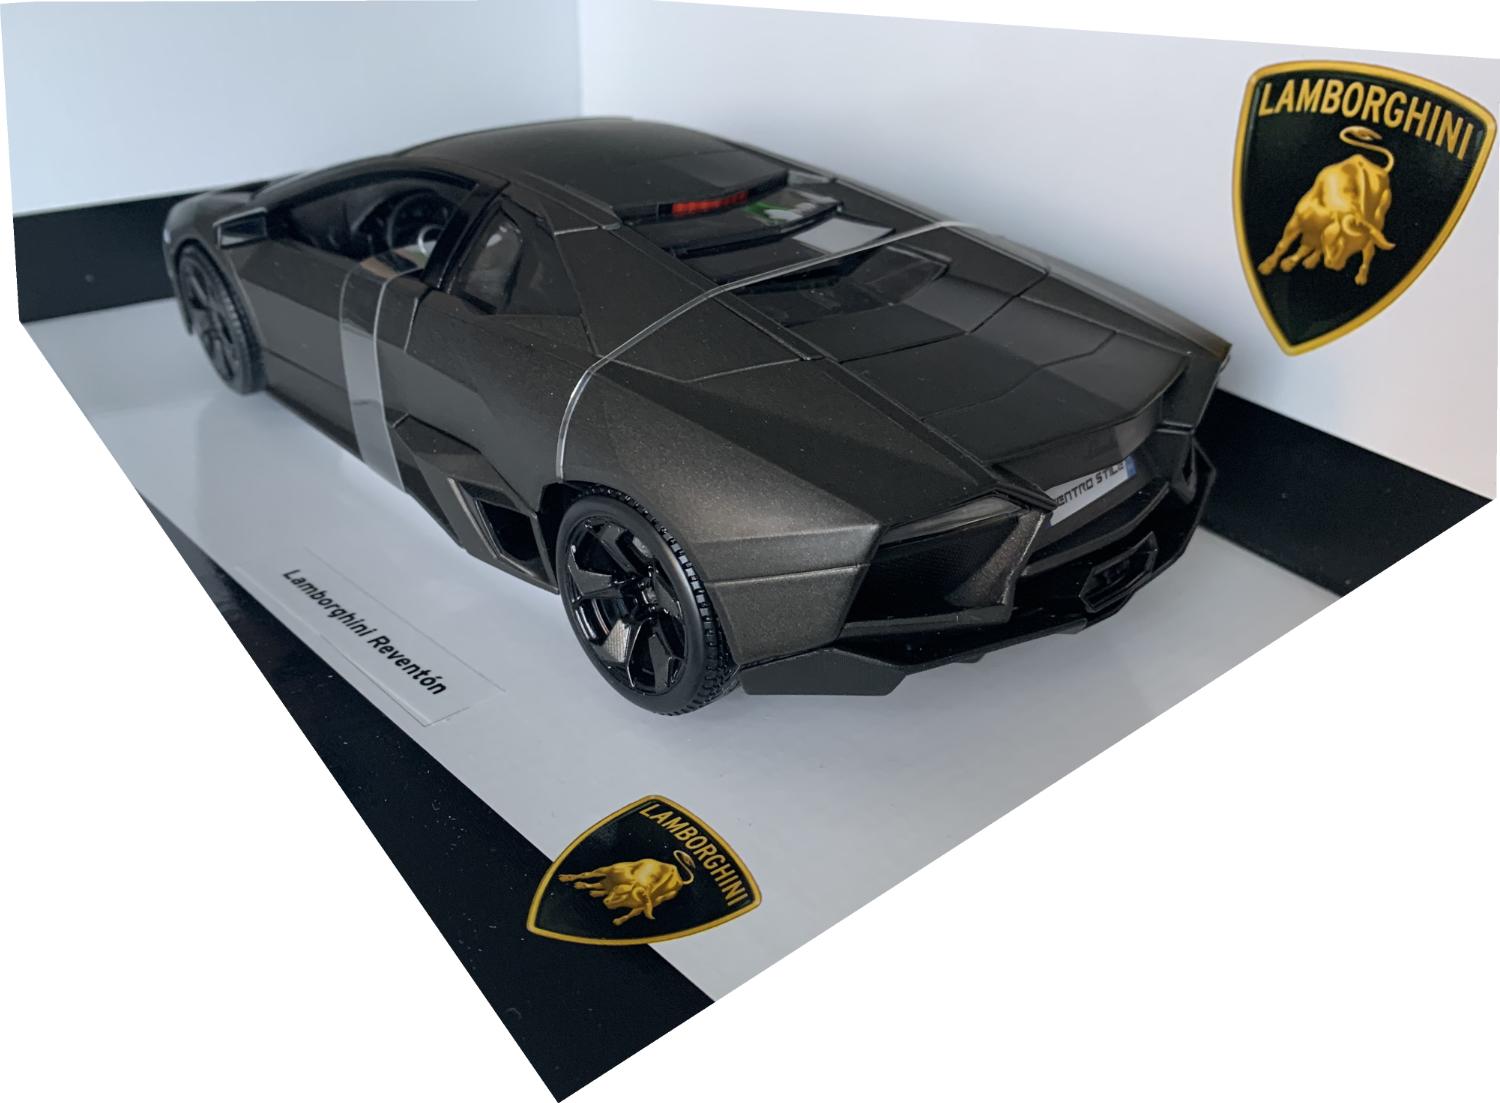 Lamborghini Reventon in metallic grey 1:18 scale model from Bburago